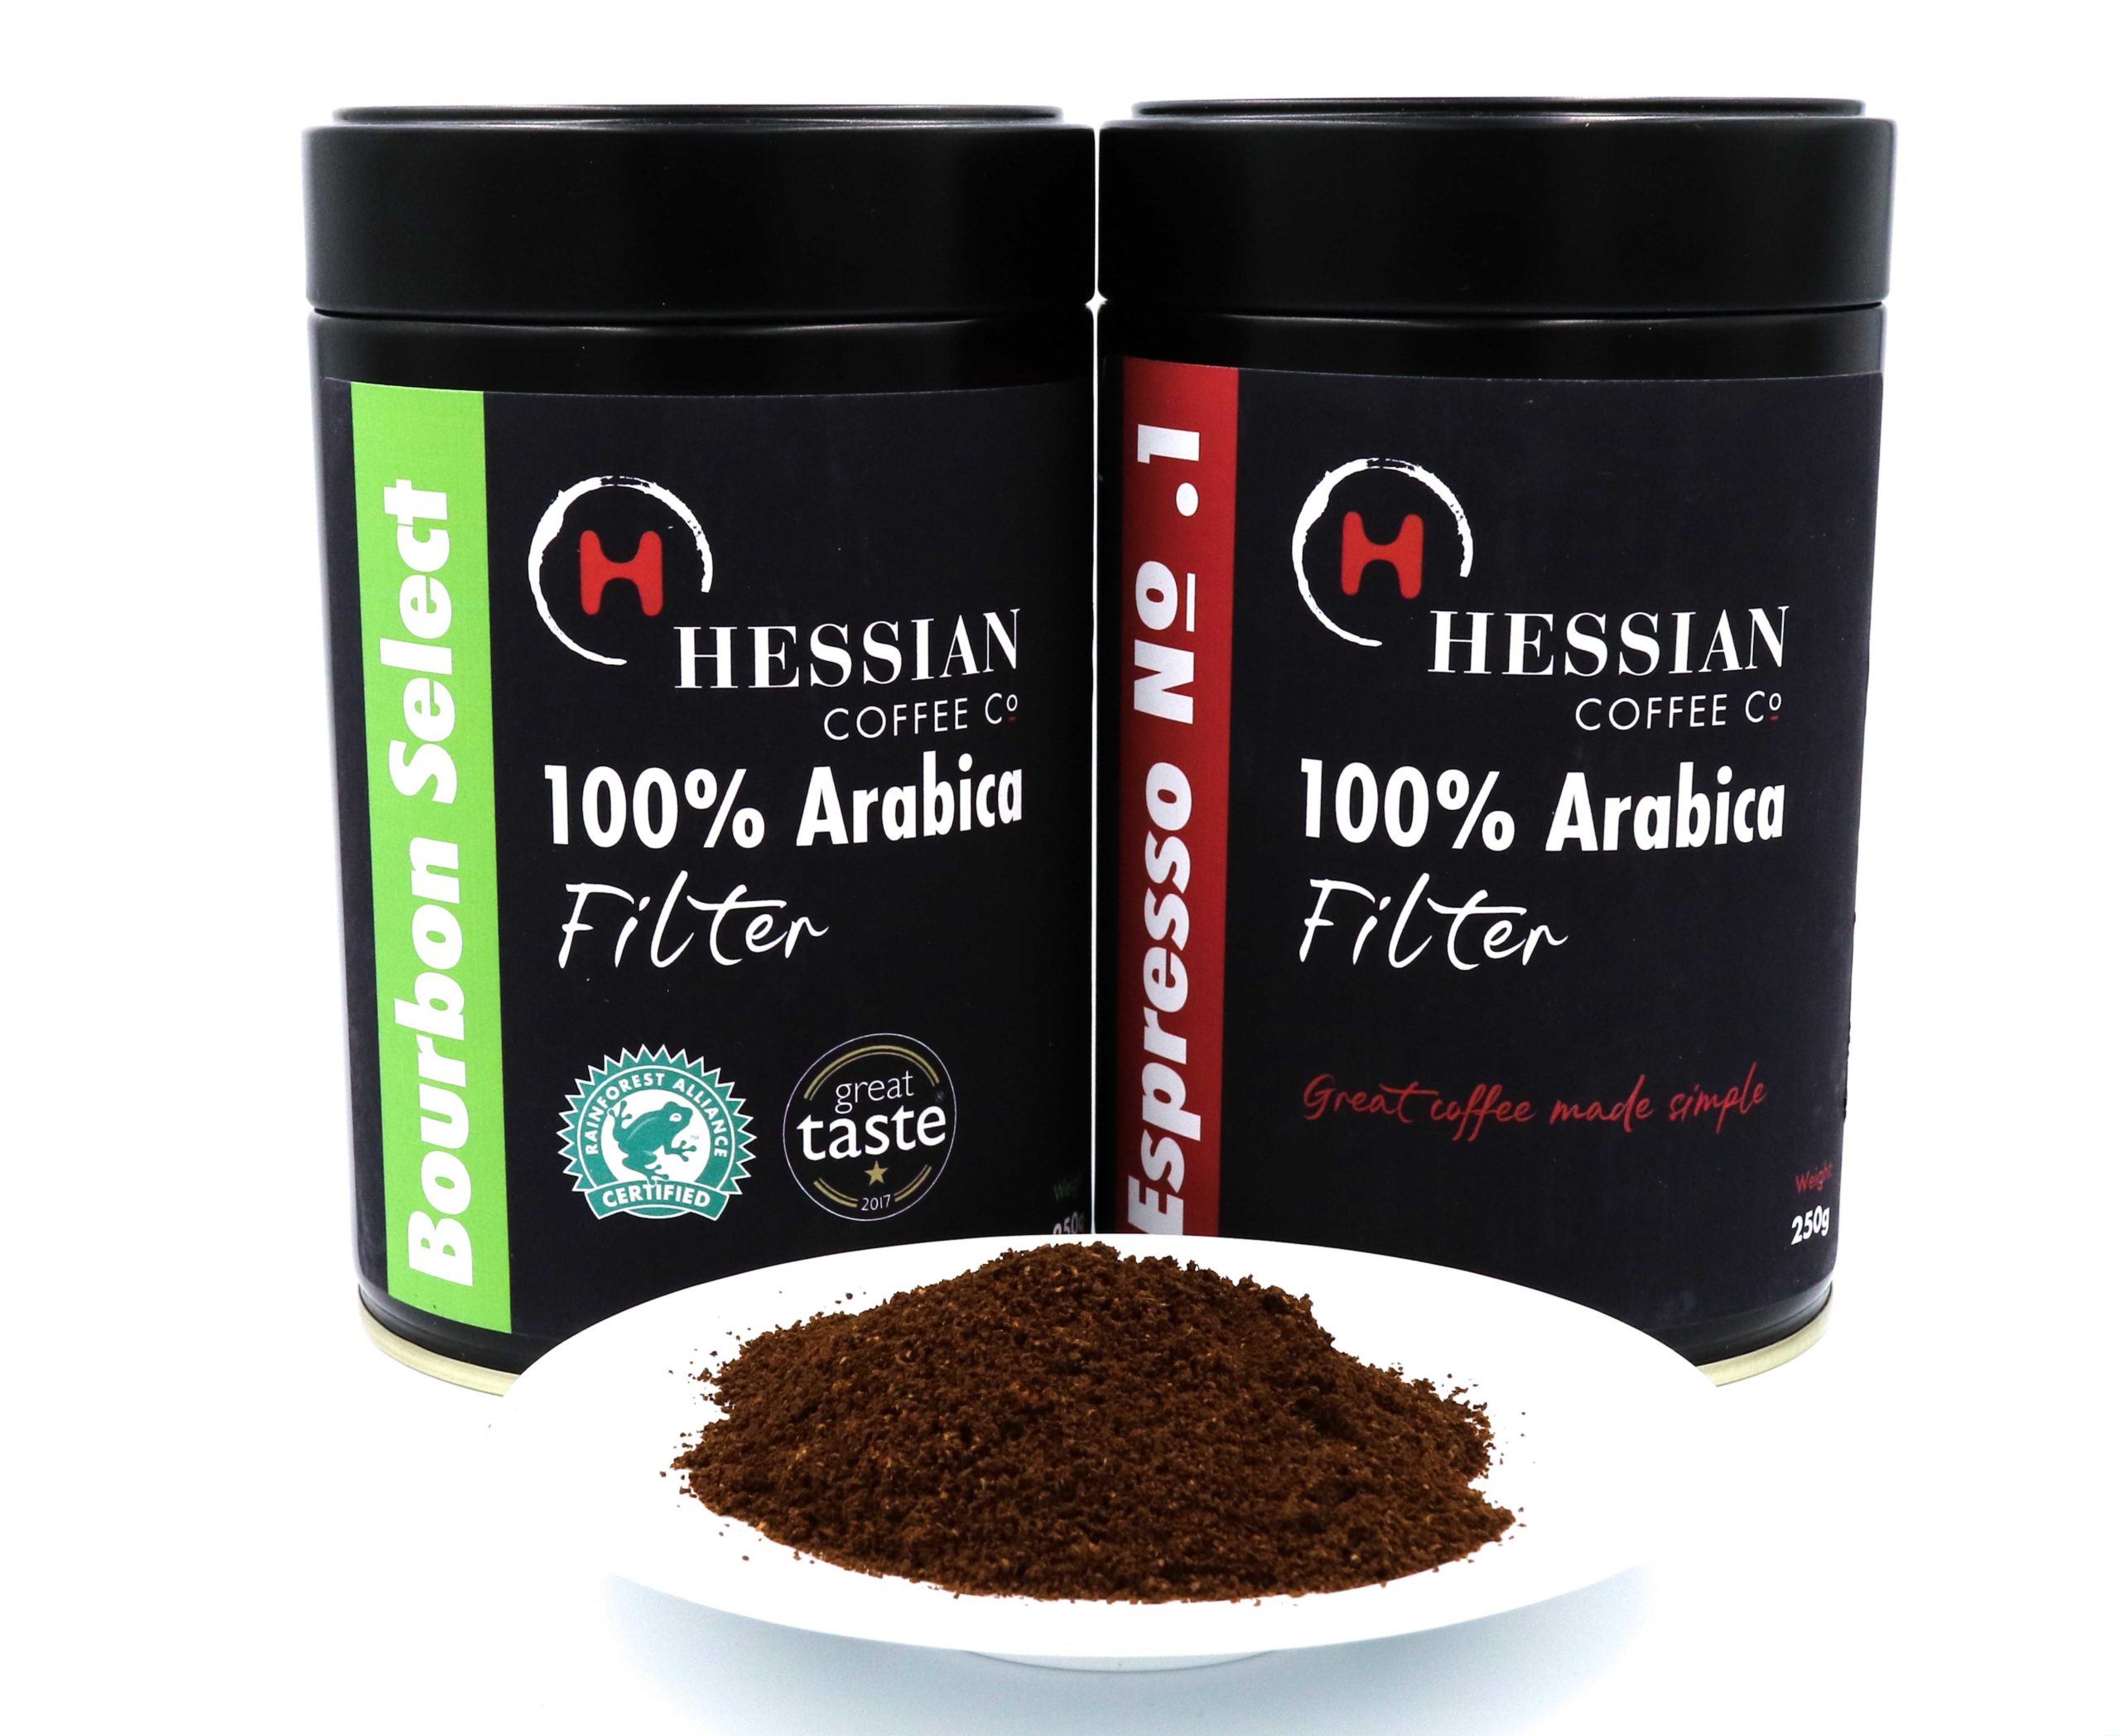 Hessian’s new retail coffee tins